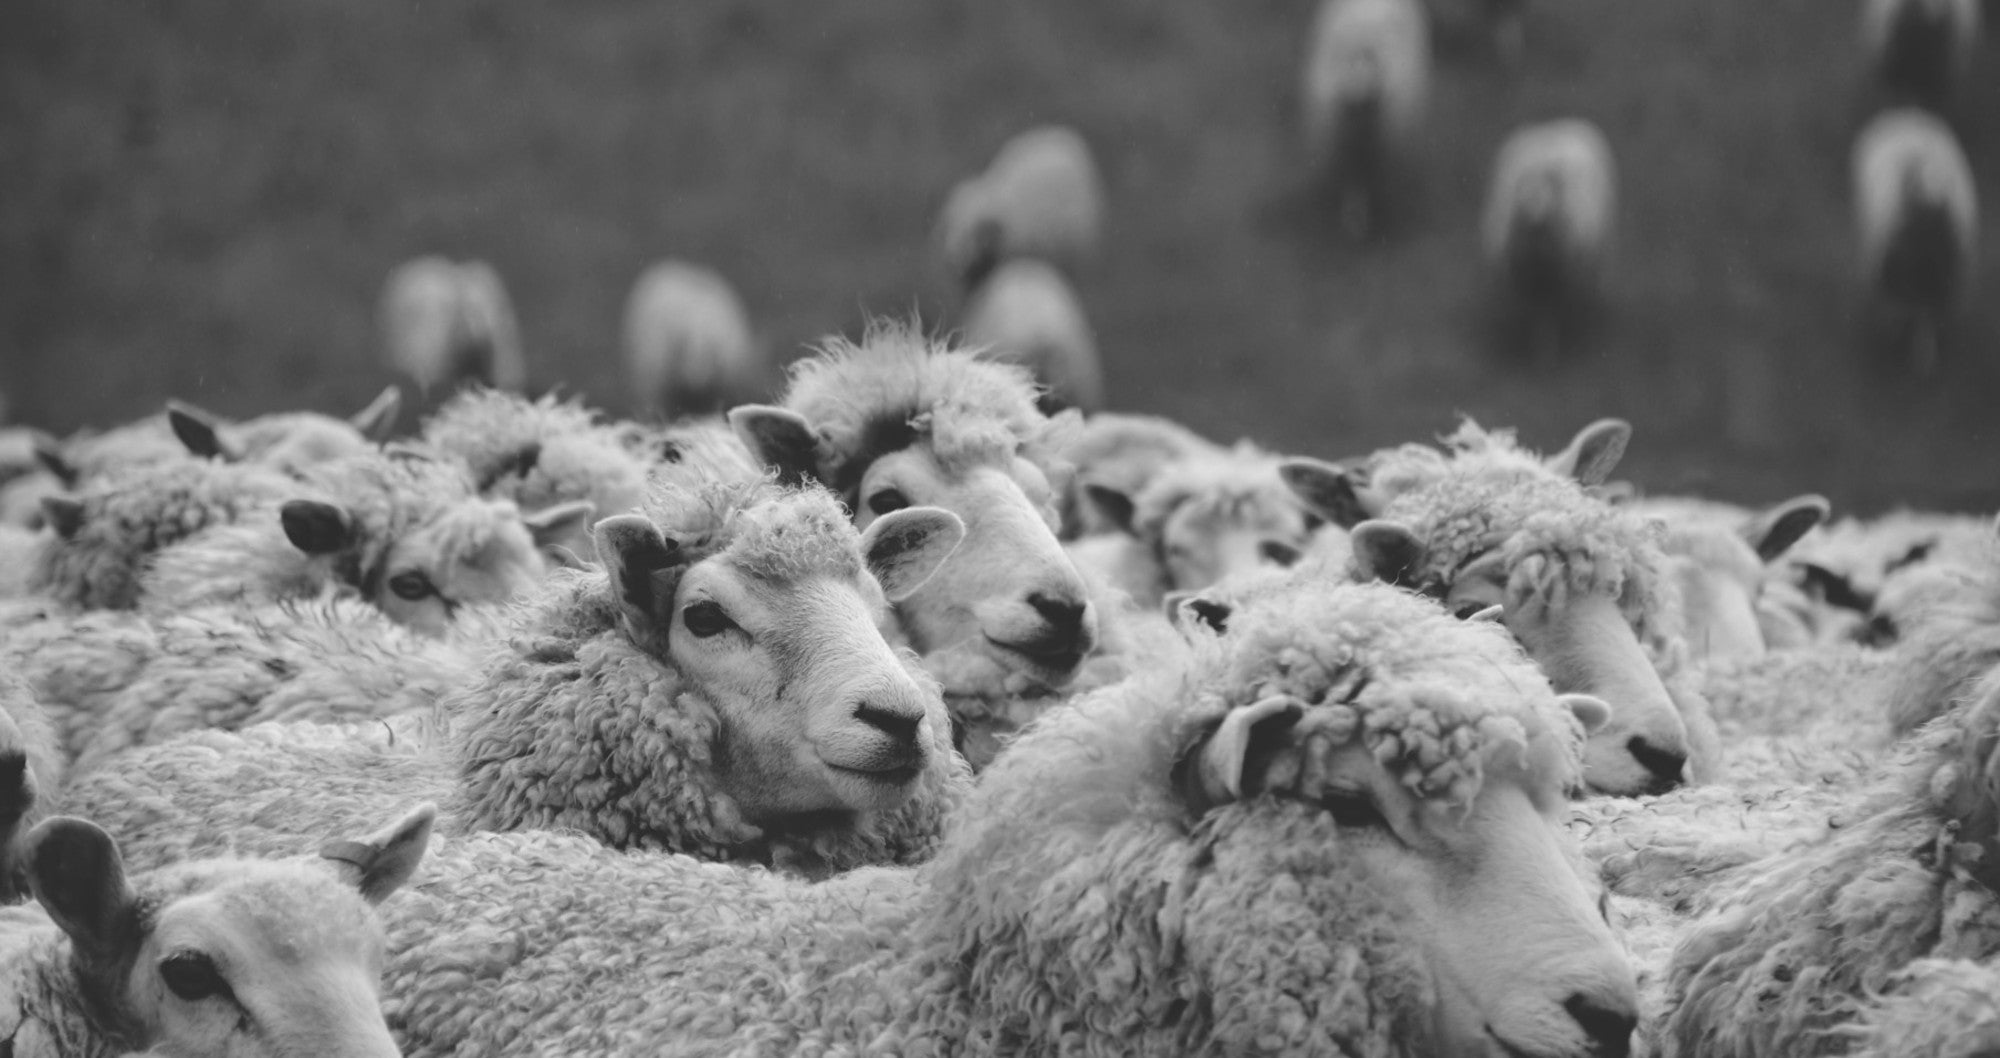 herd of sheep black and white. wool. British wool. Uk wool. wool blankets uk. British blankets made from wool. Natural wool blankets